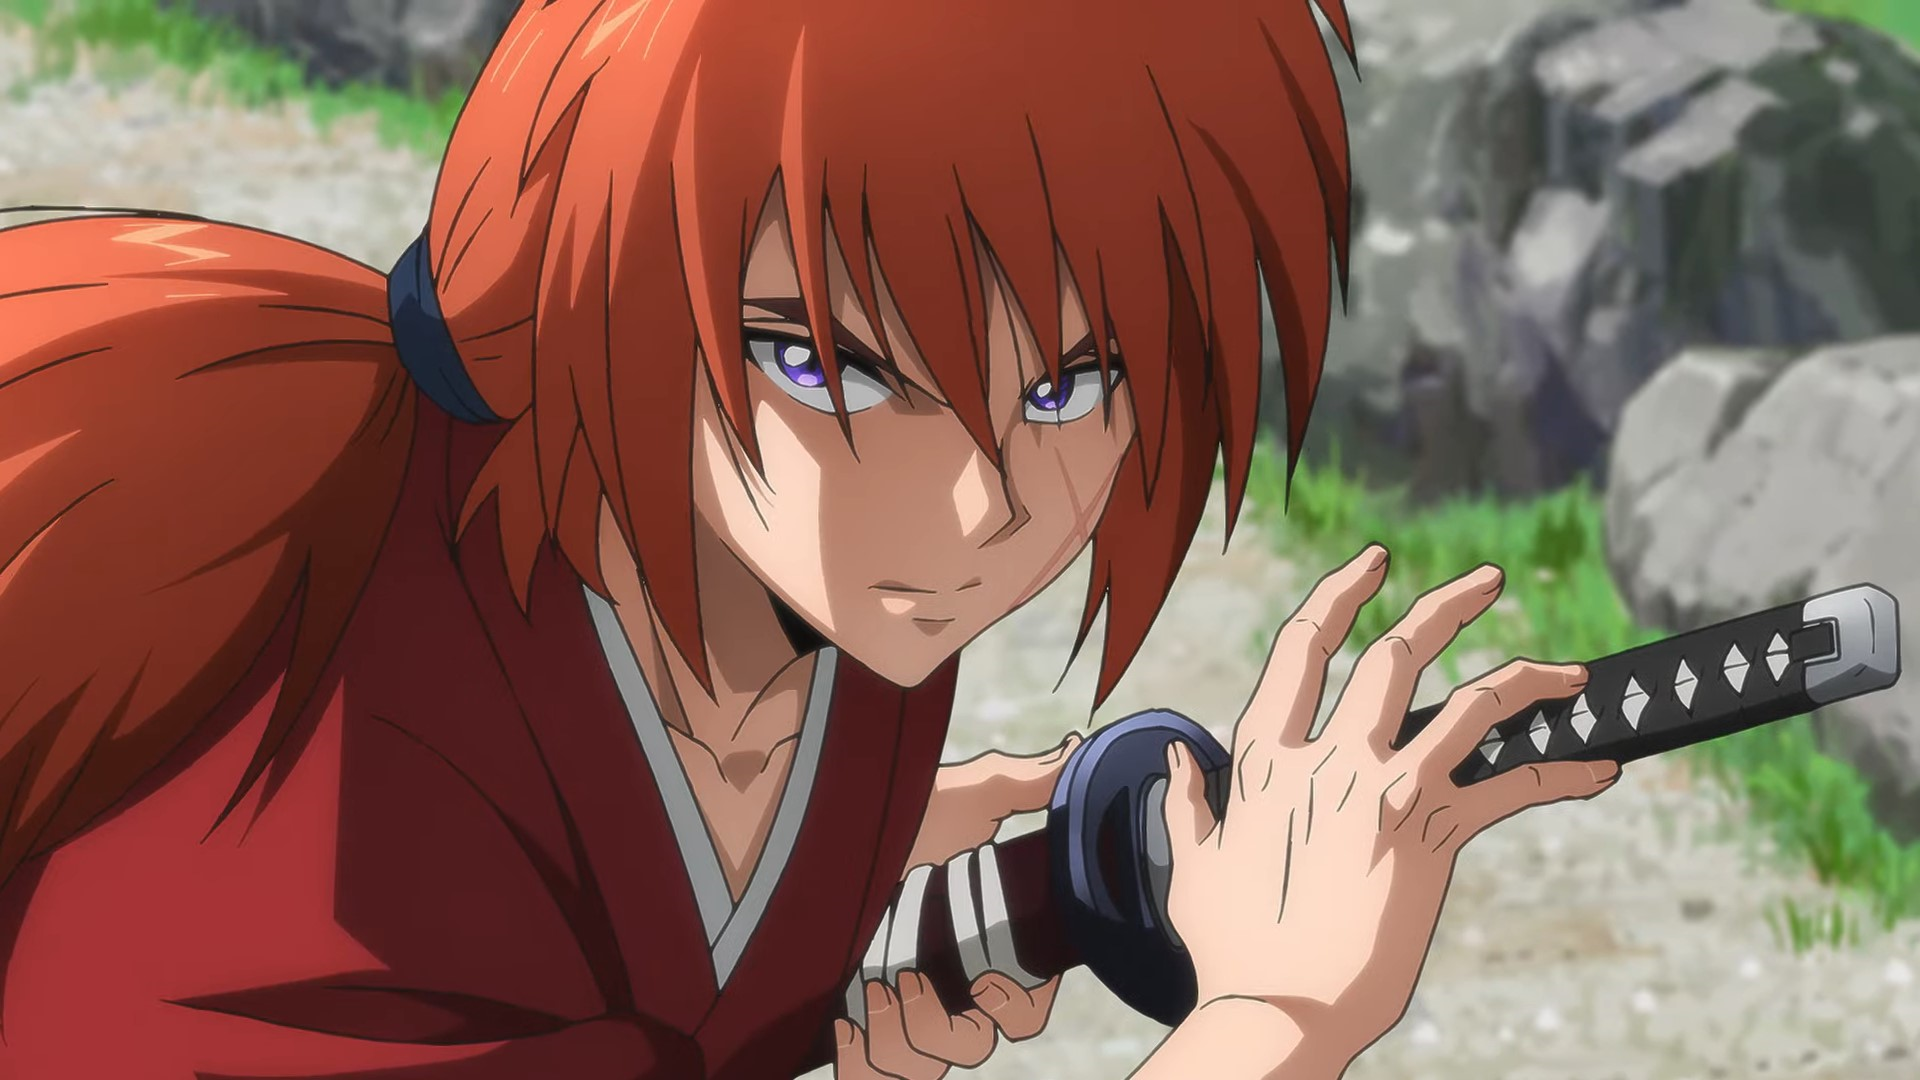 Rurouni Kenshin Episode 11: Release Date, Plot & More - OpenMediaHub